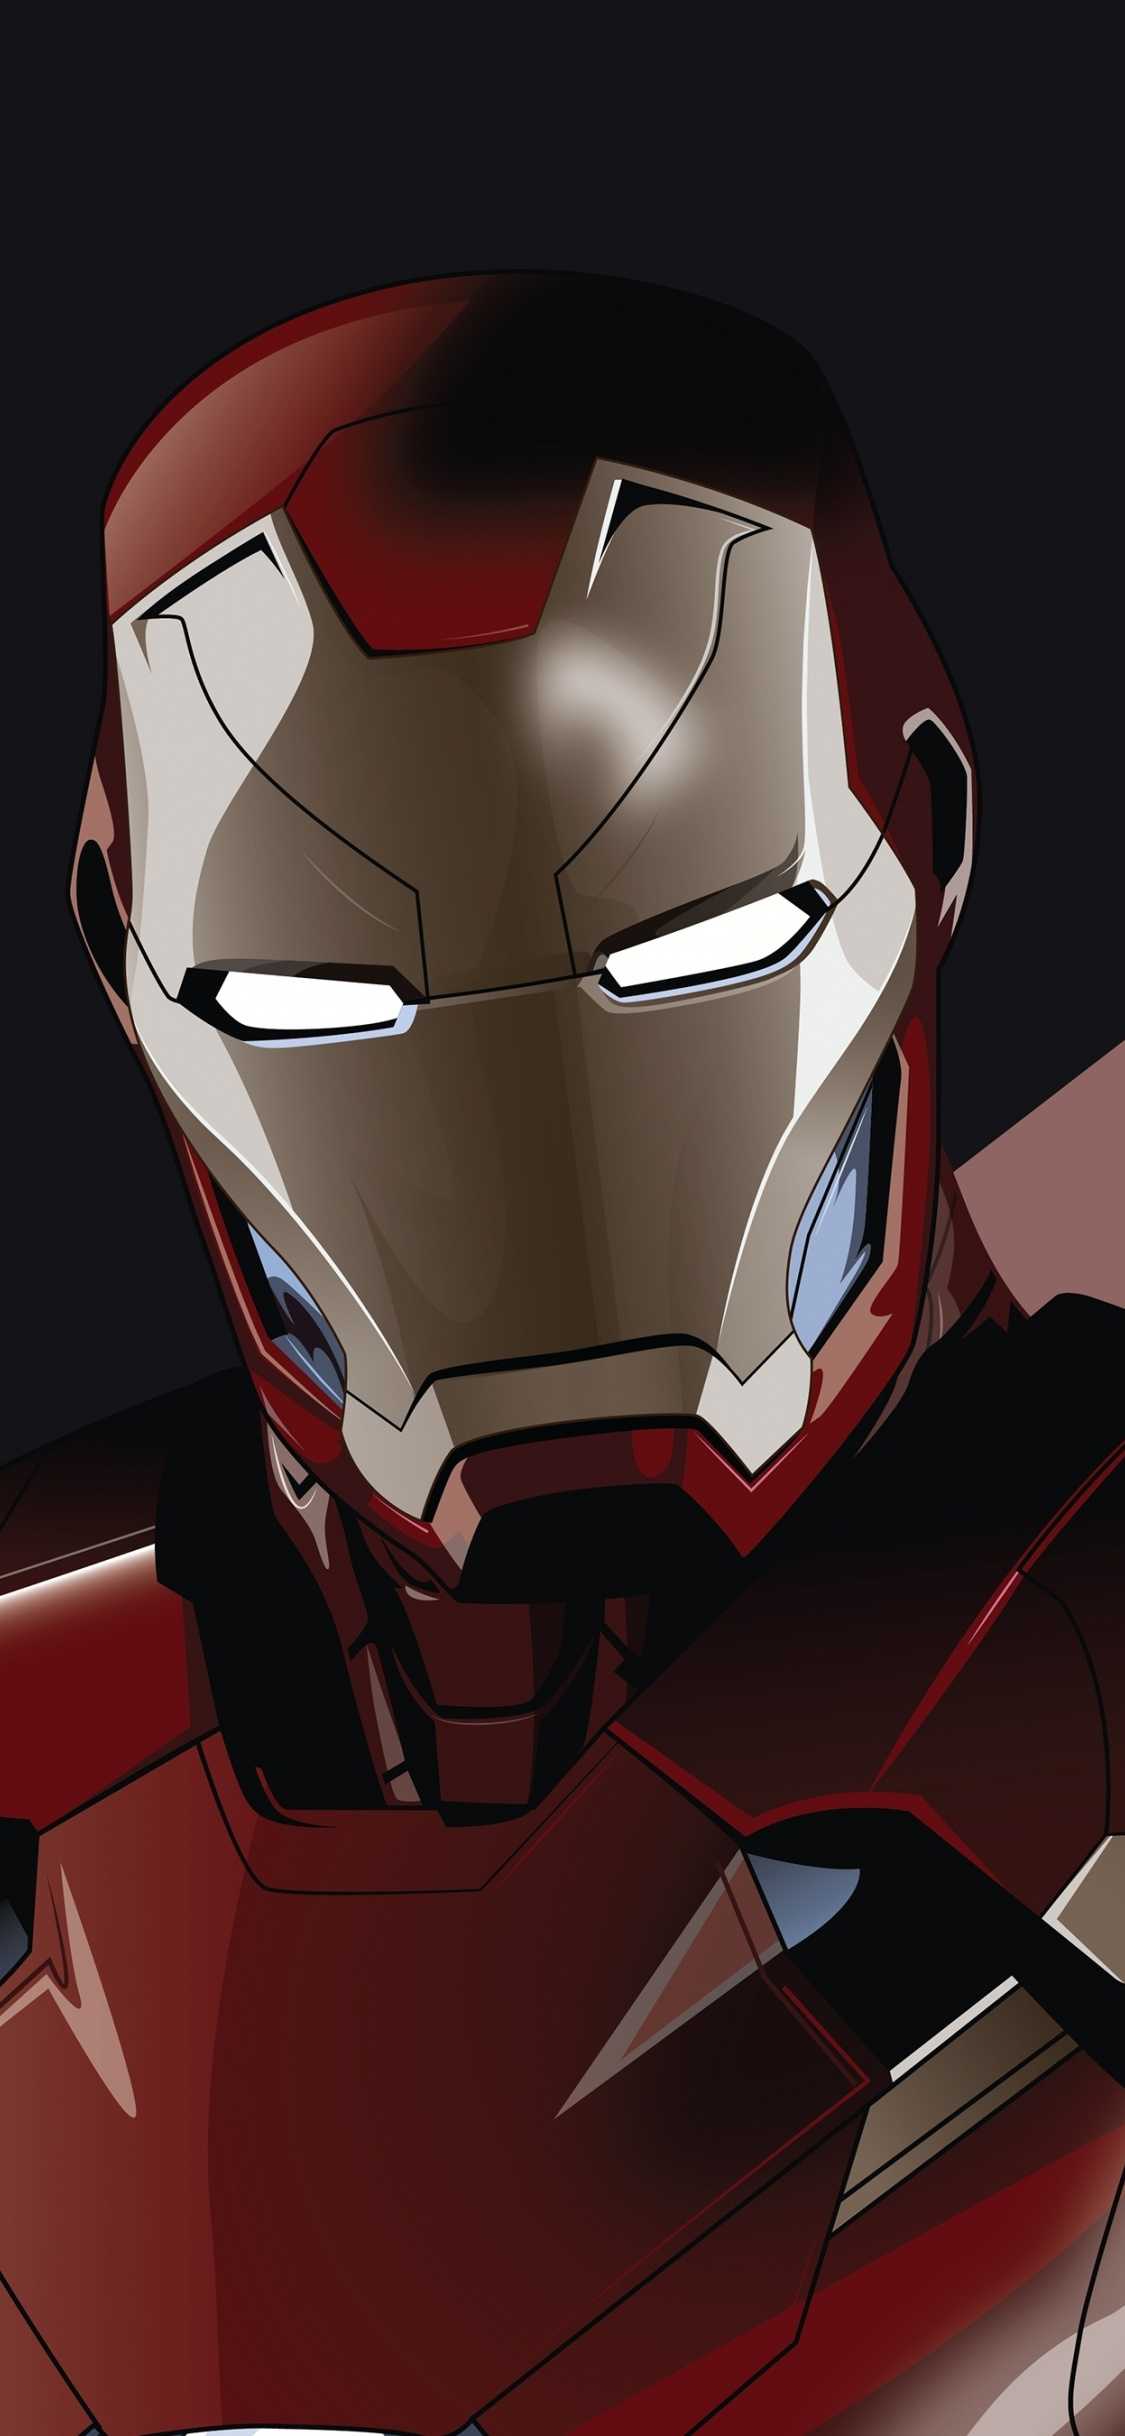 Iron Man, Superhero, Tony Stark, Artwork, Minimal, - Iron Man Wallpaper For Iphone X - HD Wallpaper 